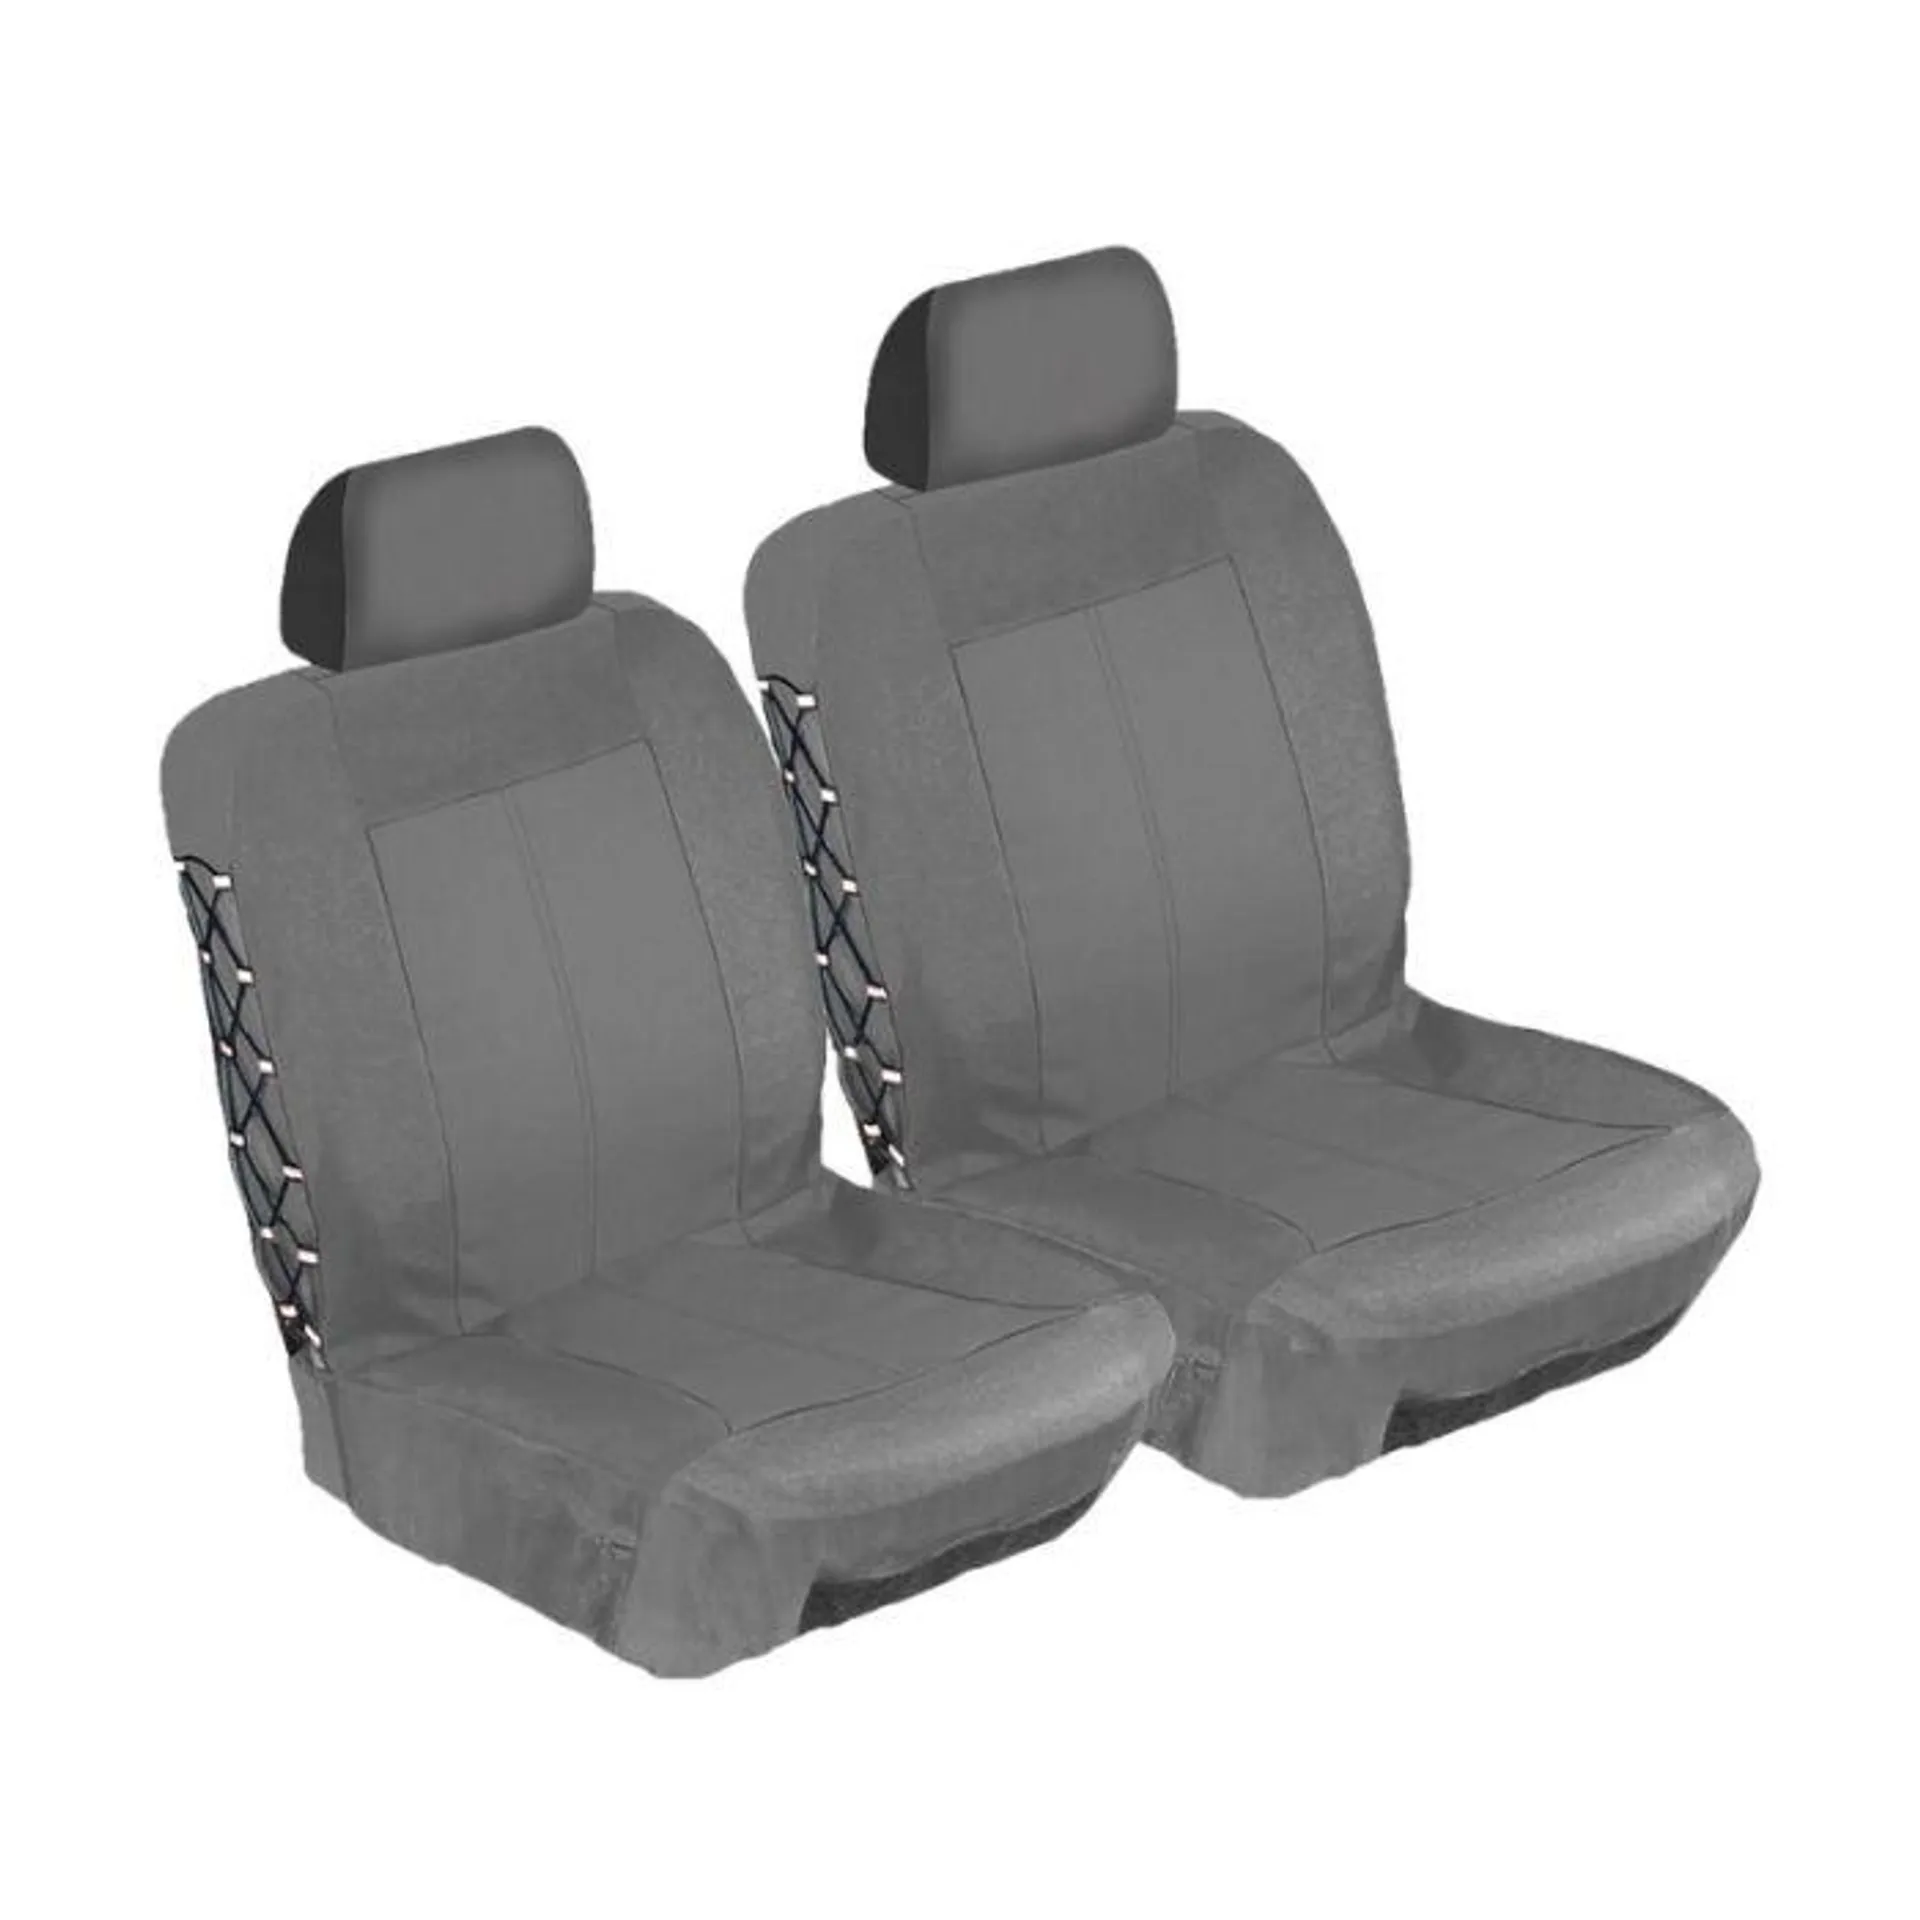 Midas Style 4X4 Safari II Seat Cover Set Front Grey